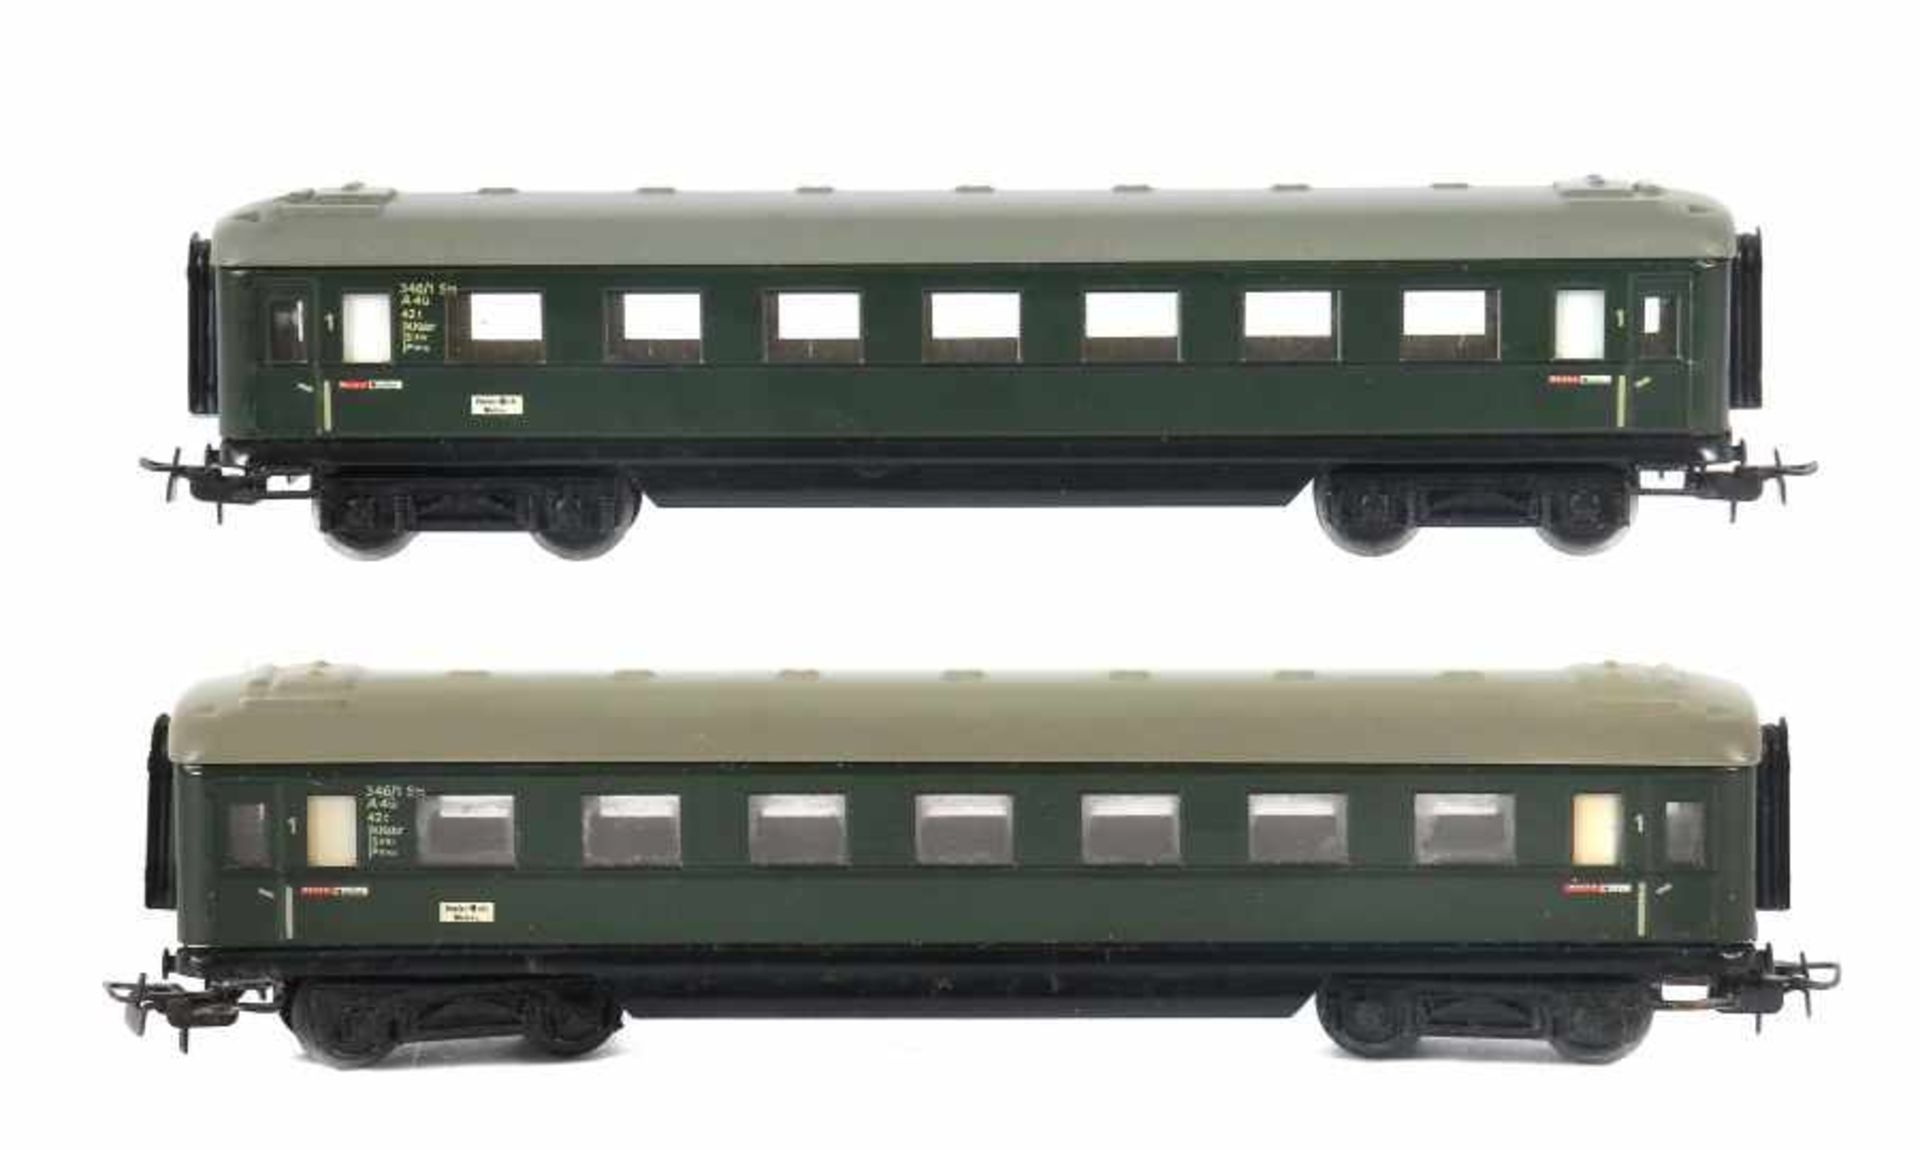 2 SchürzenwagenMärklin, Spur H0, 2x D-Zug-Wagen (Schürzenwagen), 346/1.6, 1. Klasse, 1x graues Dach,